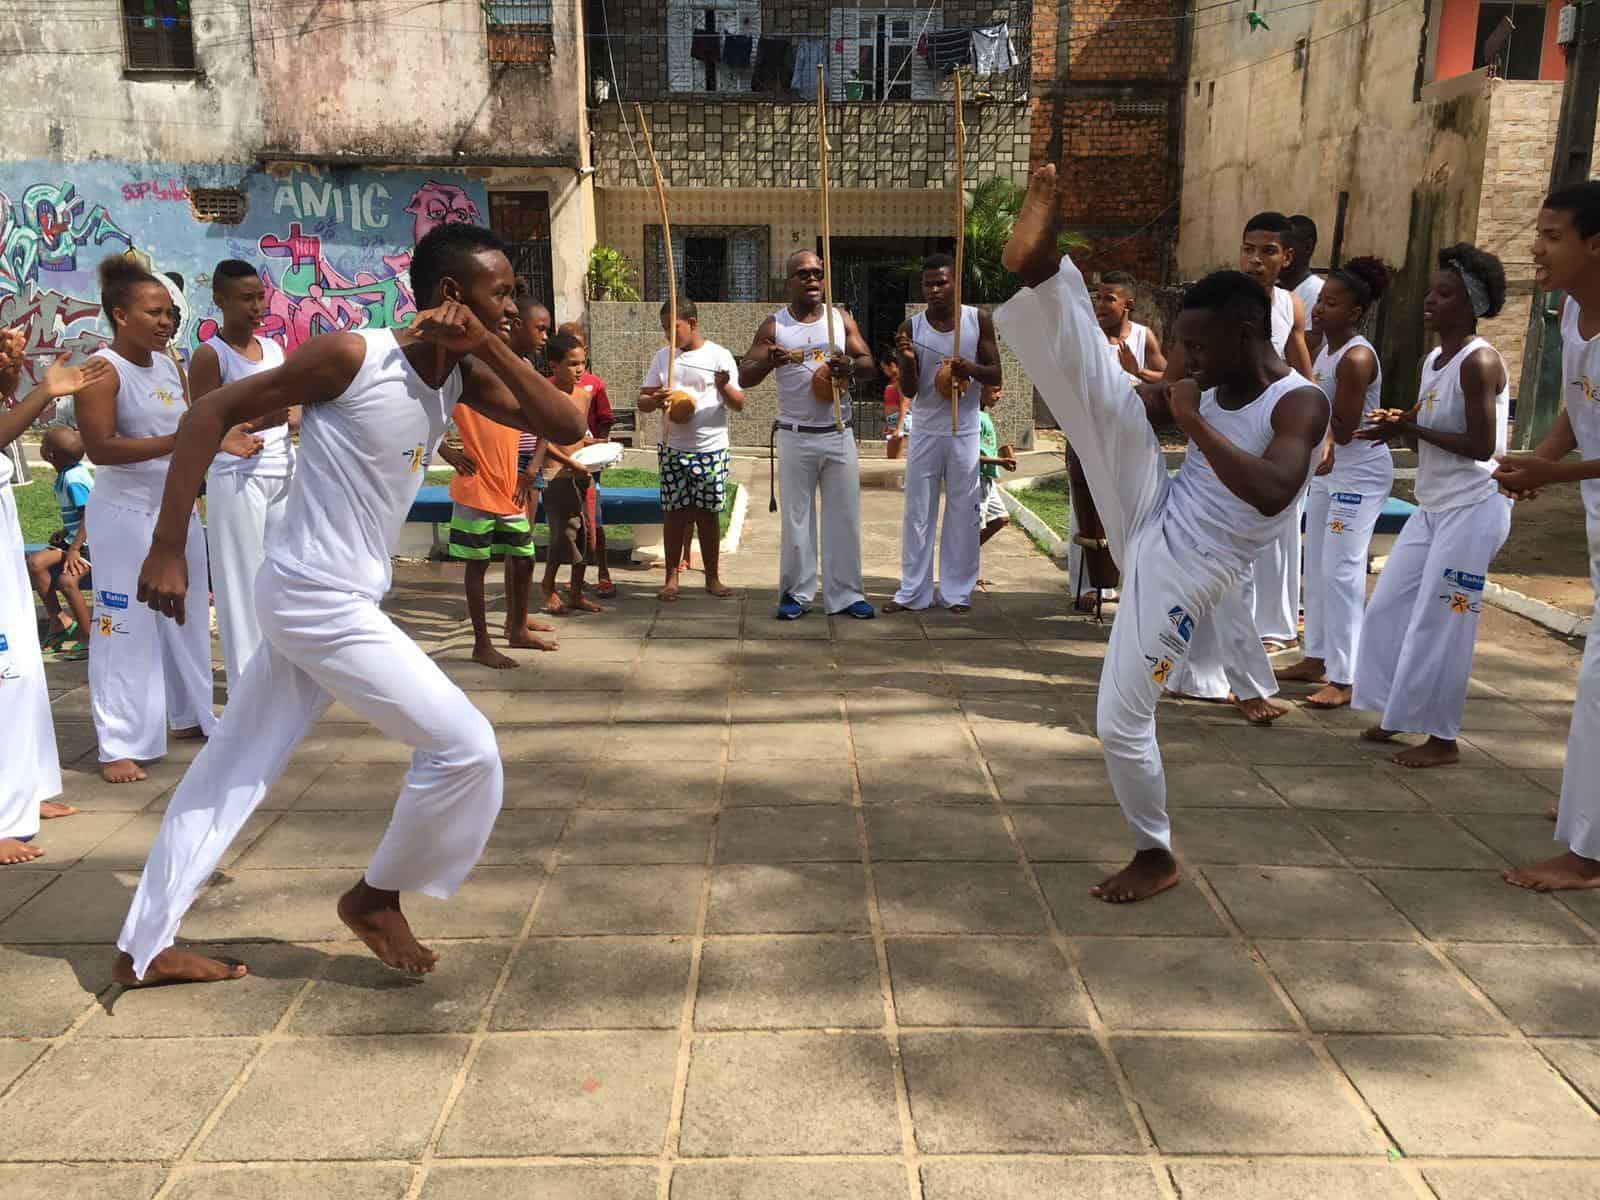 Types of Martial Arts: Capoeira